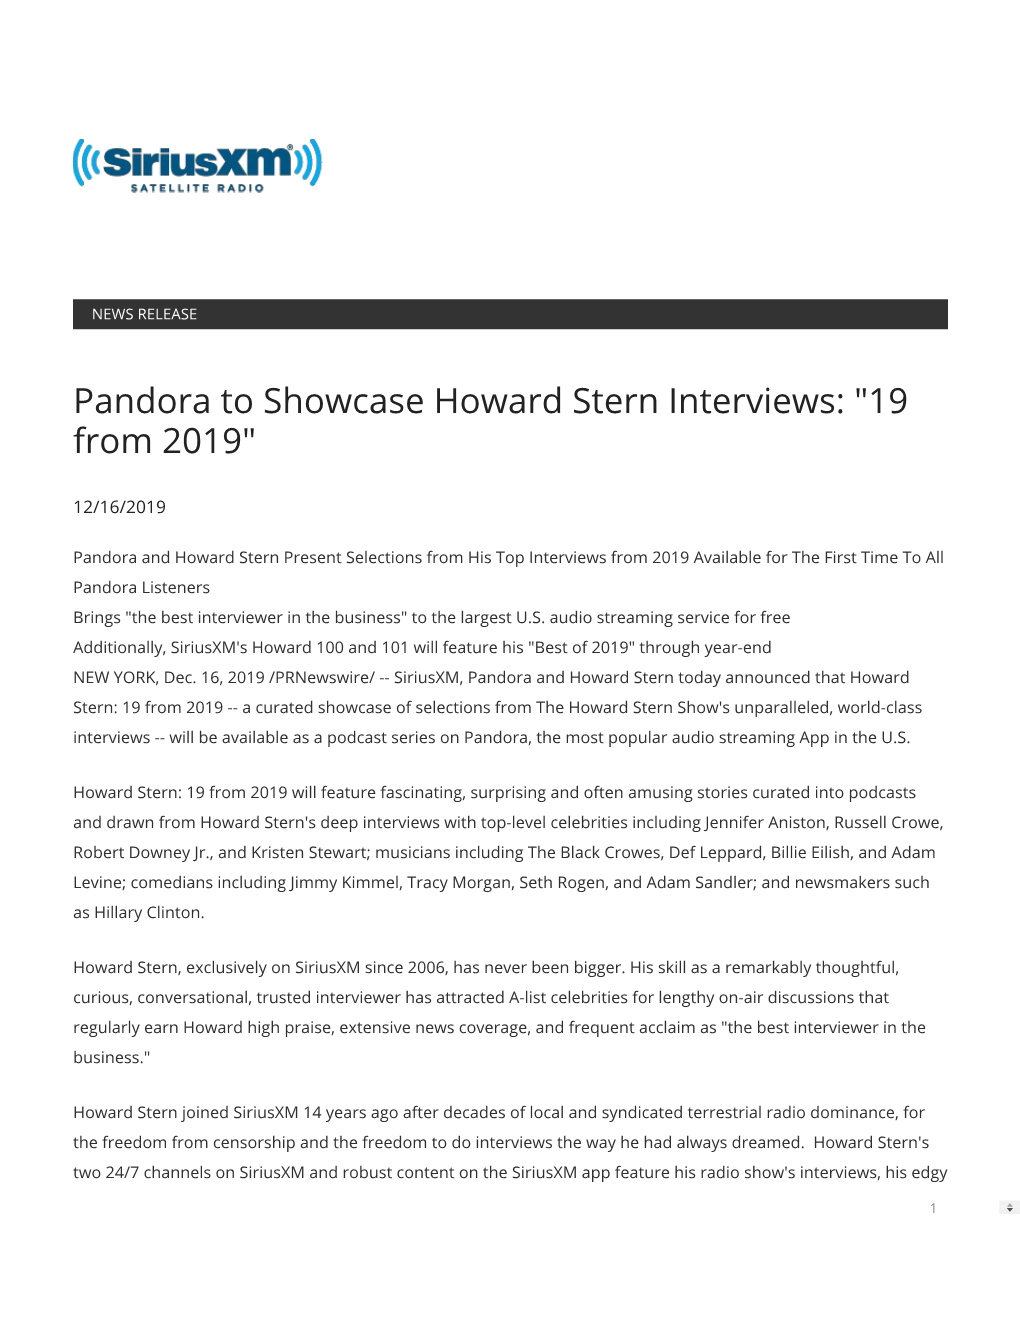 Pandora to Showcase Howard Stern Interviews: "19 from 2019"